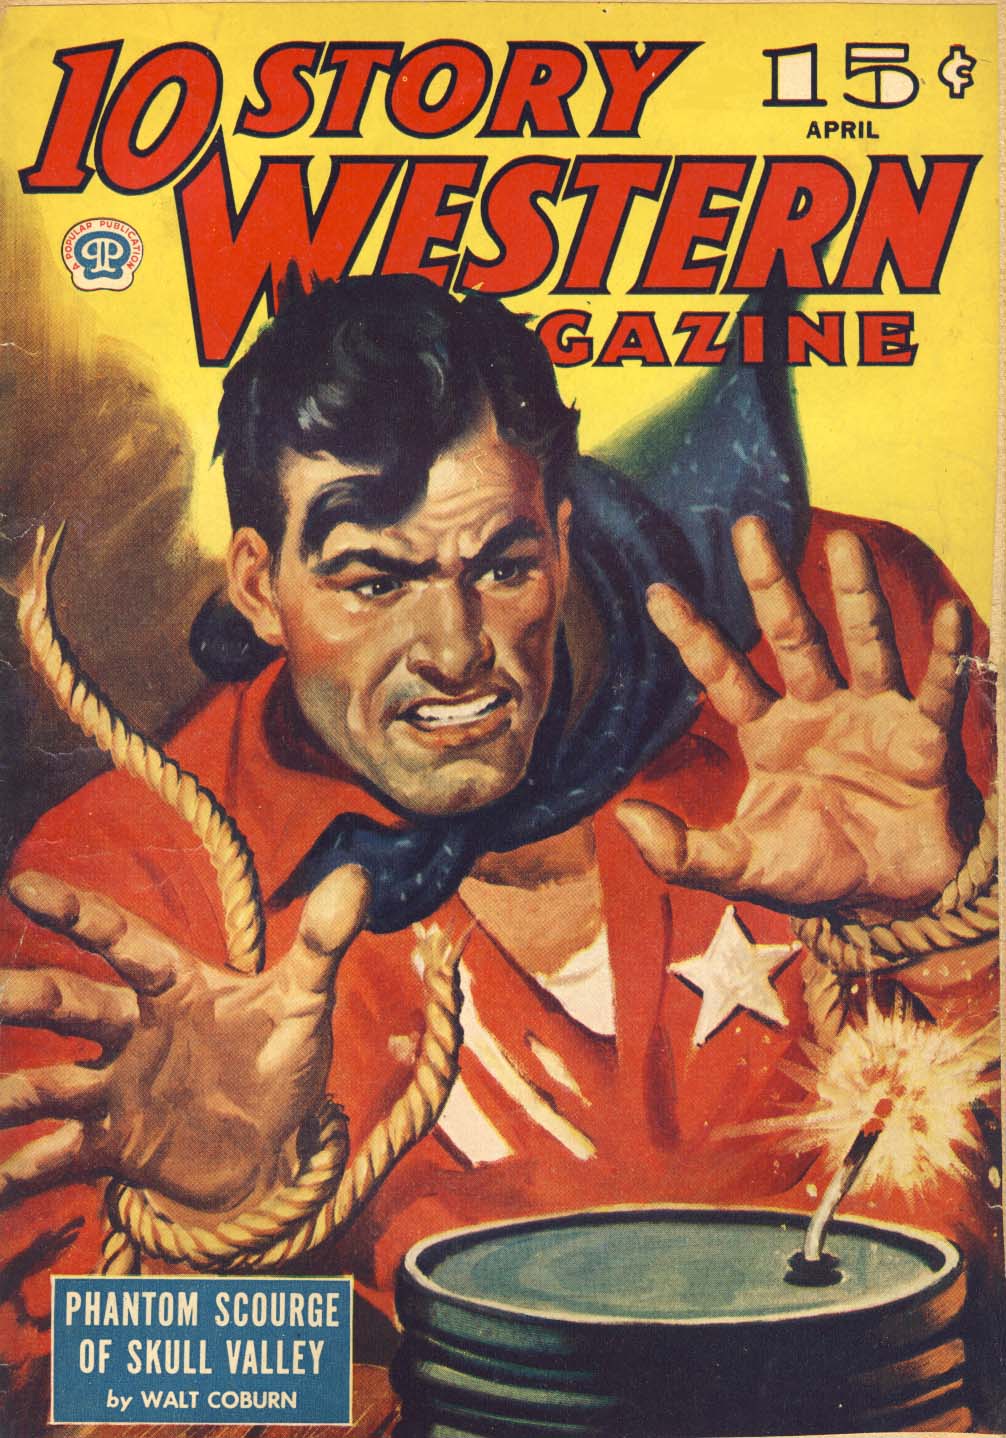 10 Story Western Magazine, v.21, n.25, Apr. 1945  cover